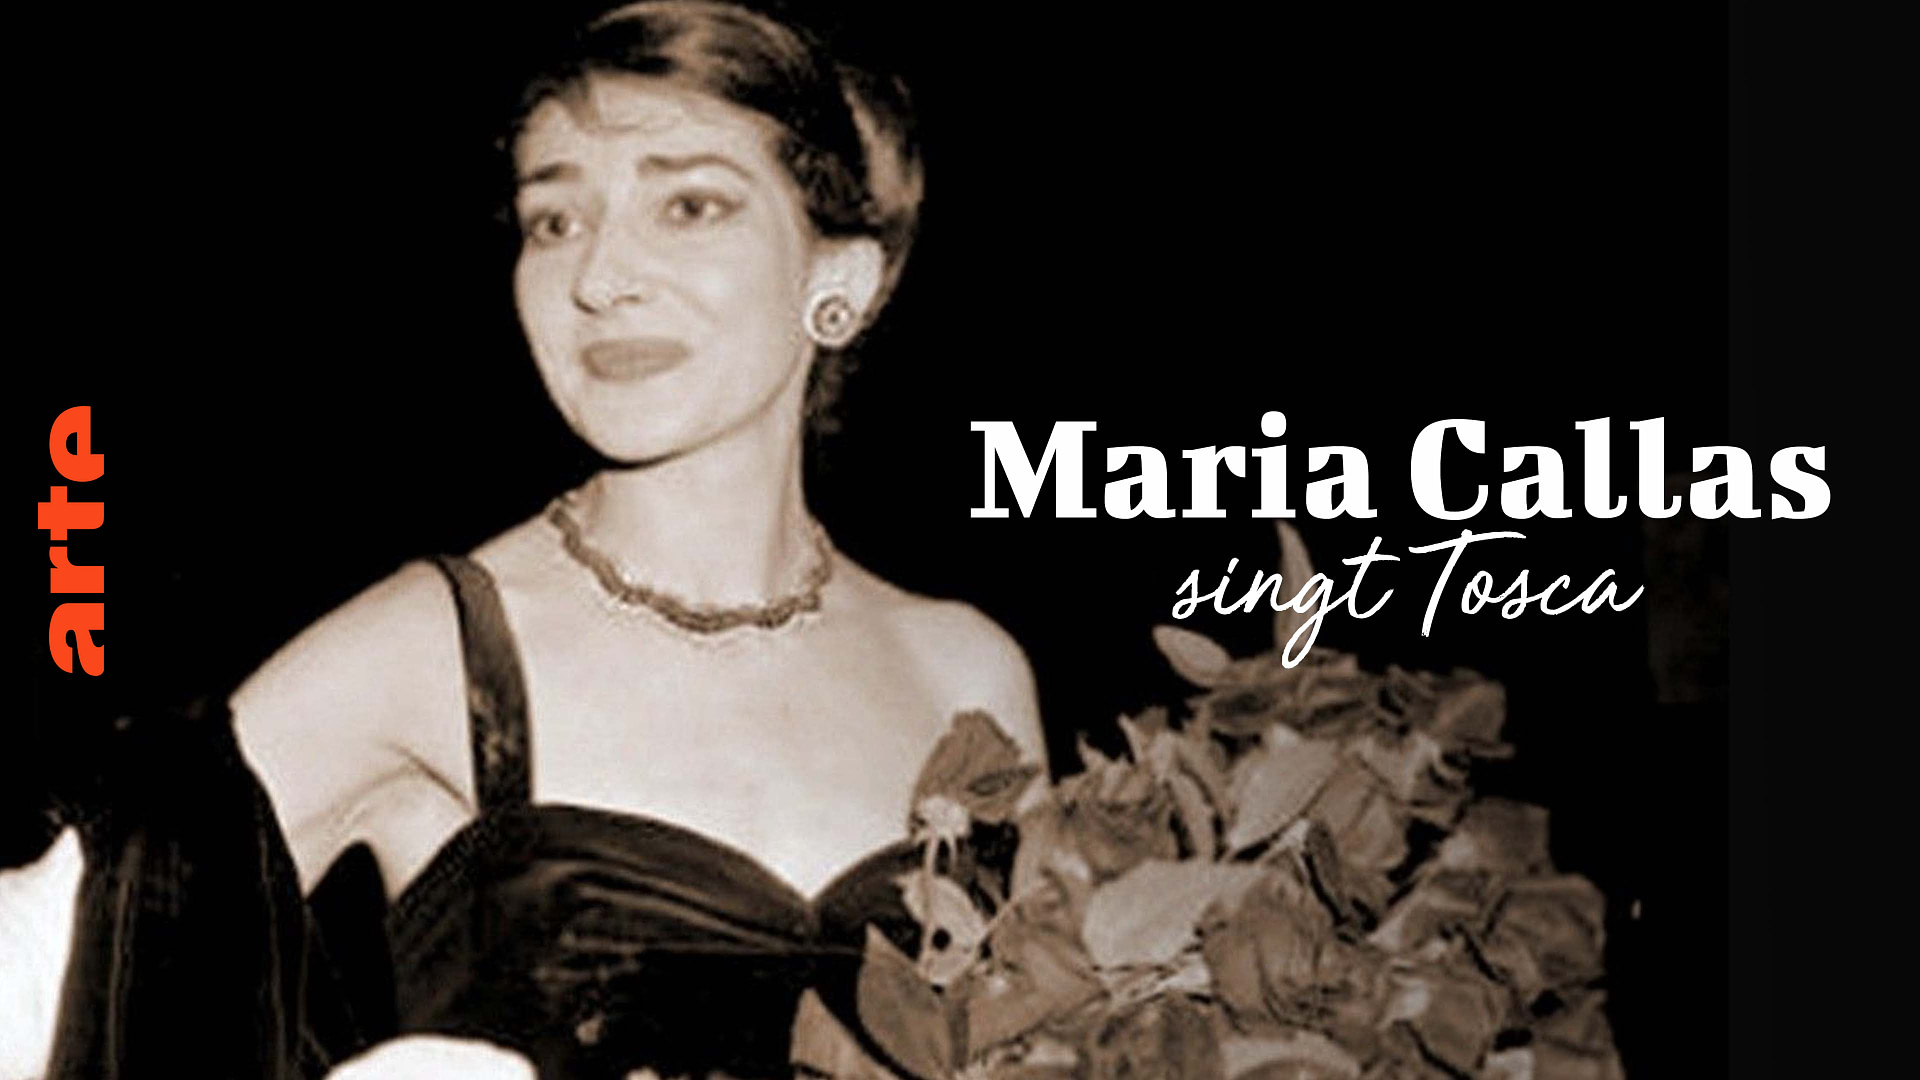 Maria Callas singt Tosca - Oper